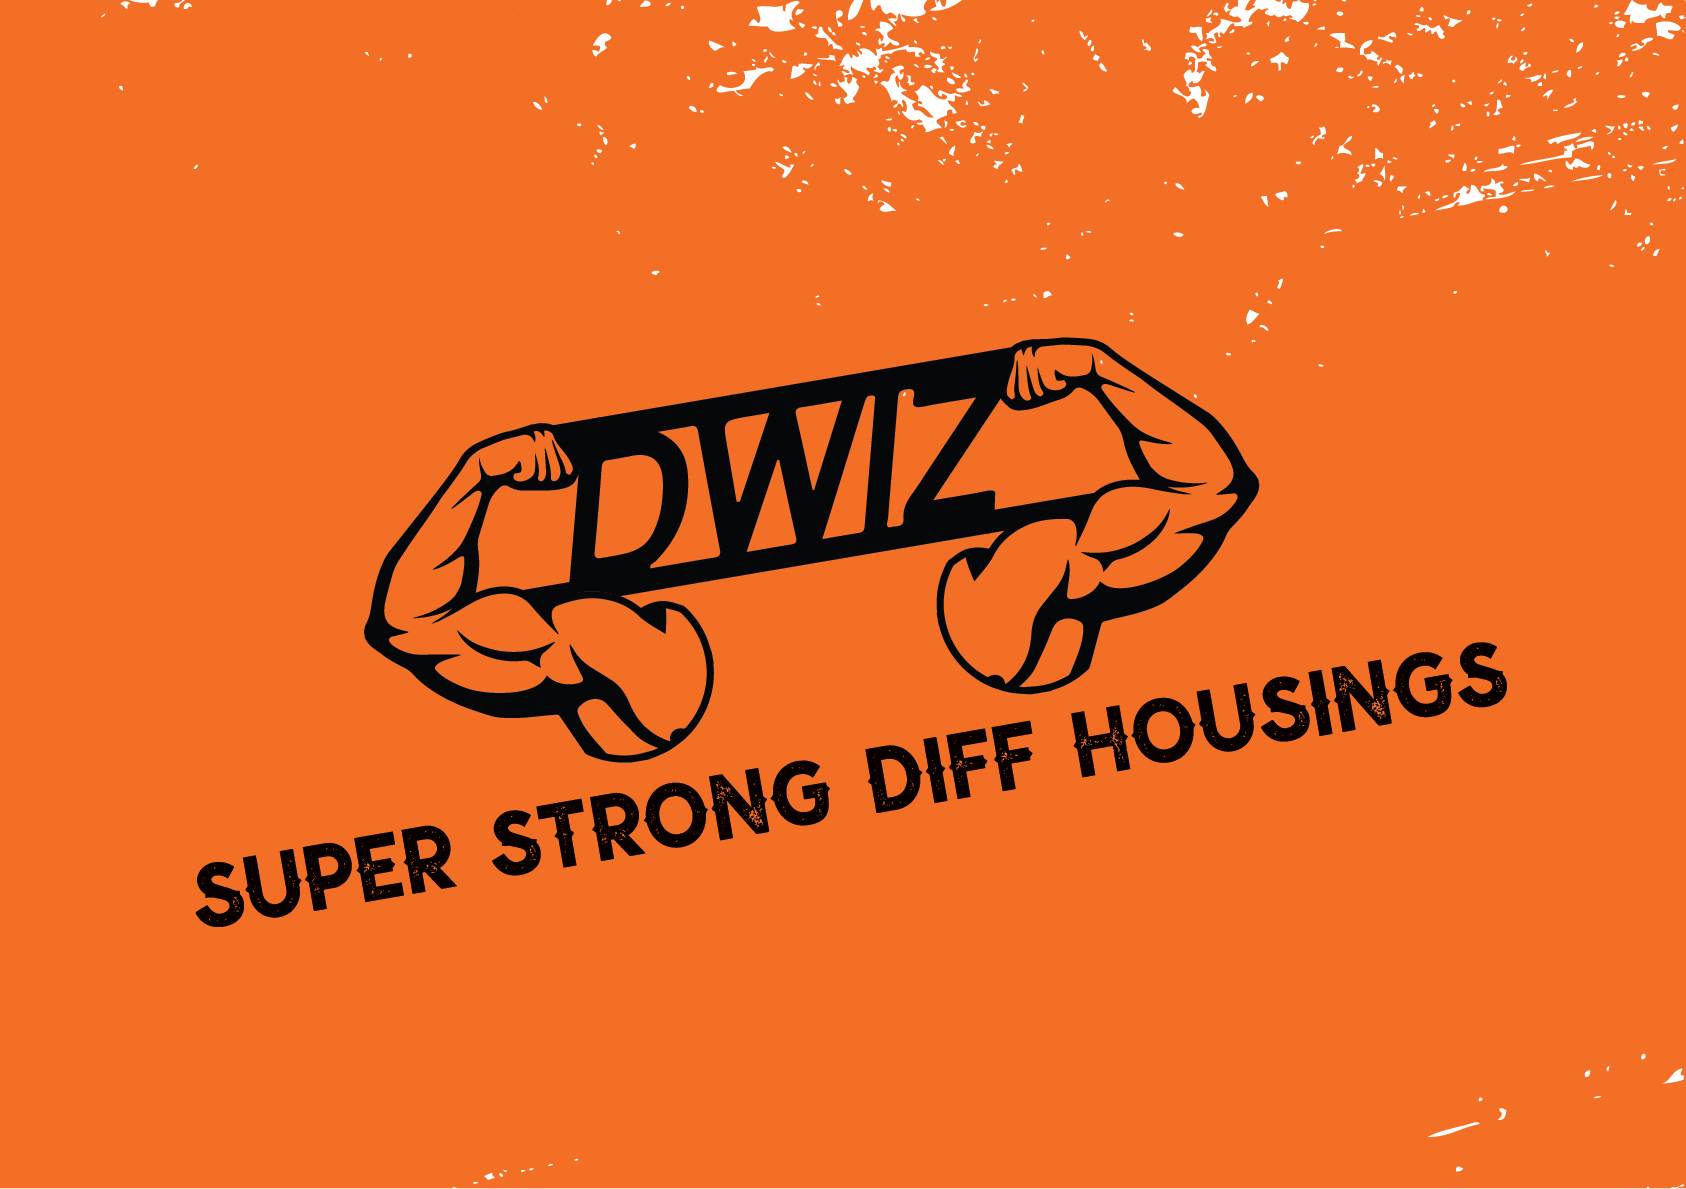 Dwiz Diff Housings